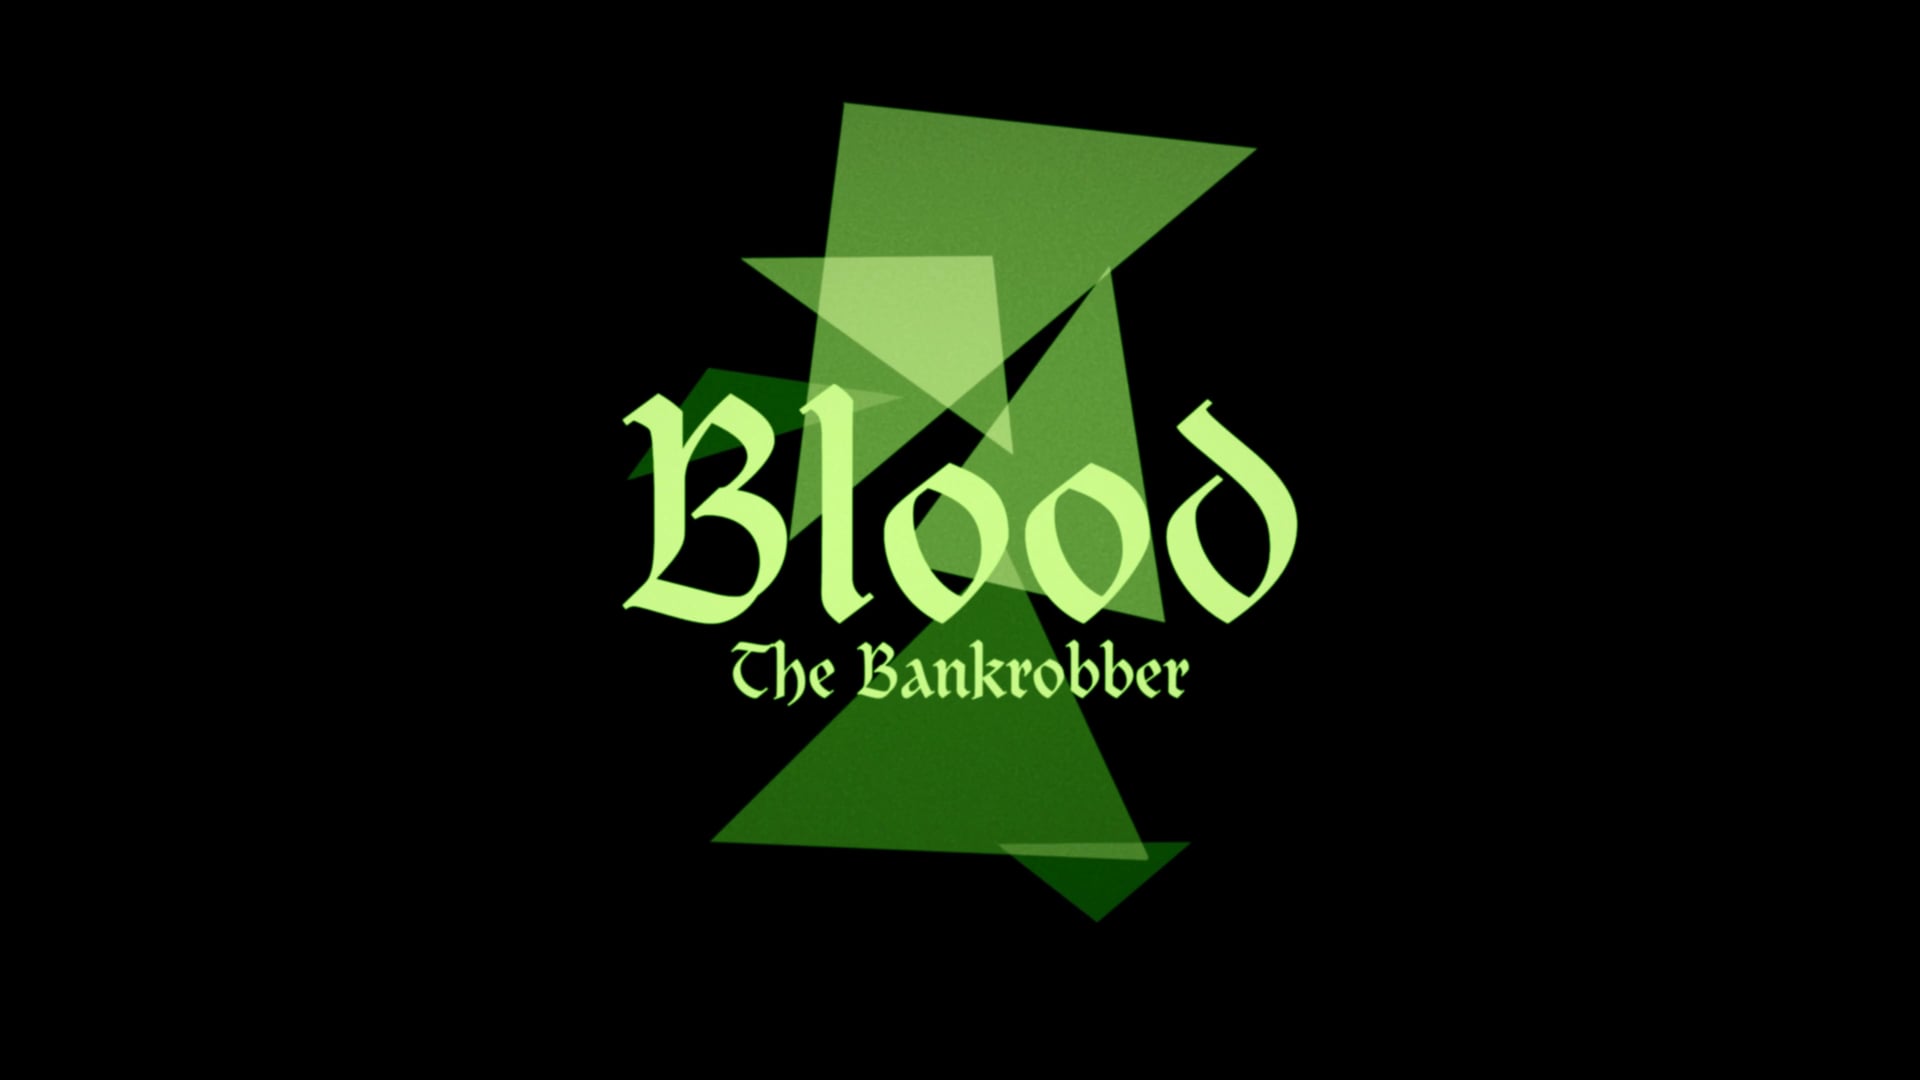 BLOOD - THE BANKROBBER